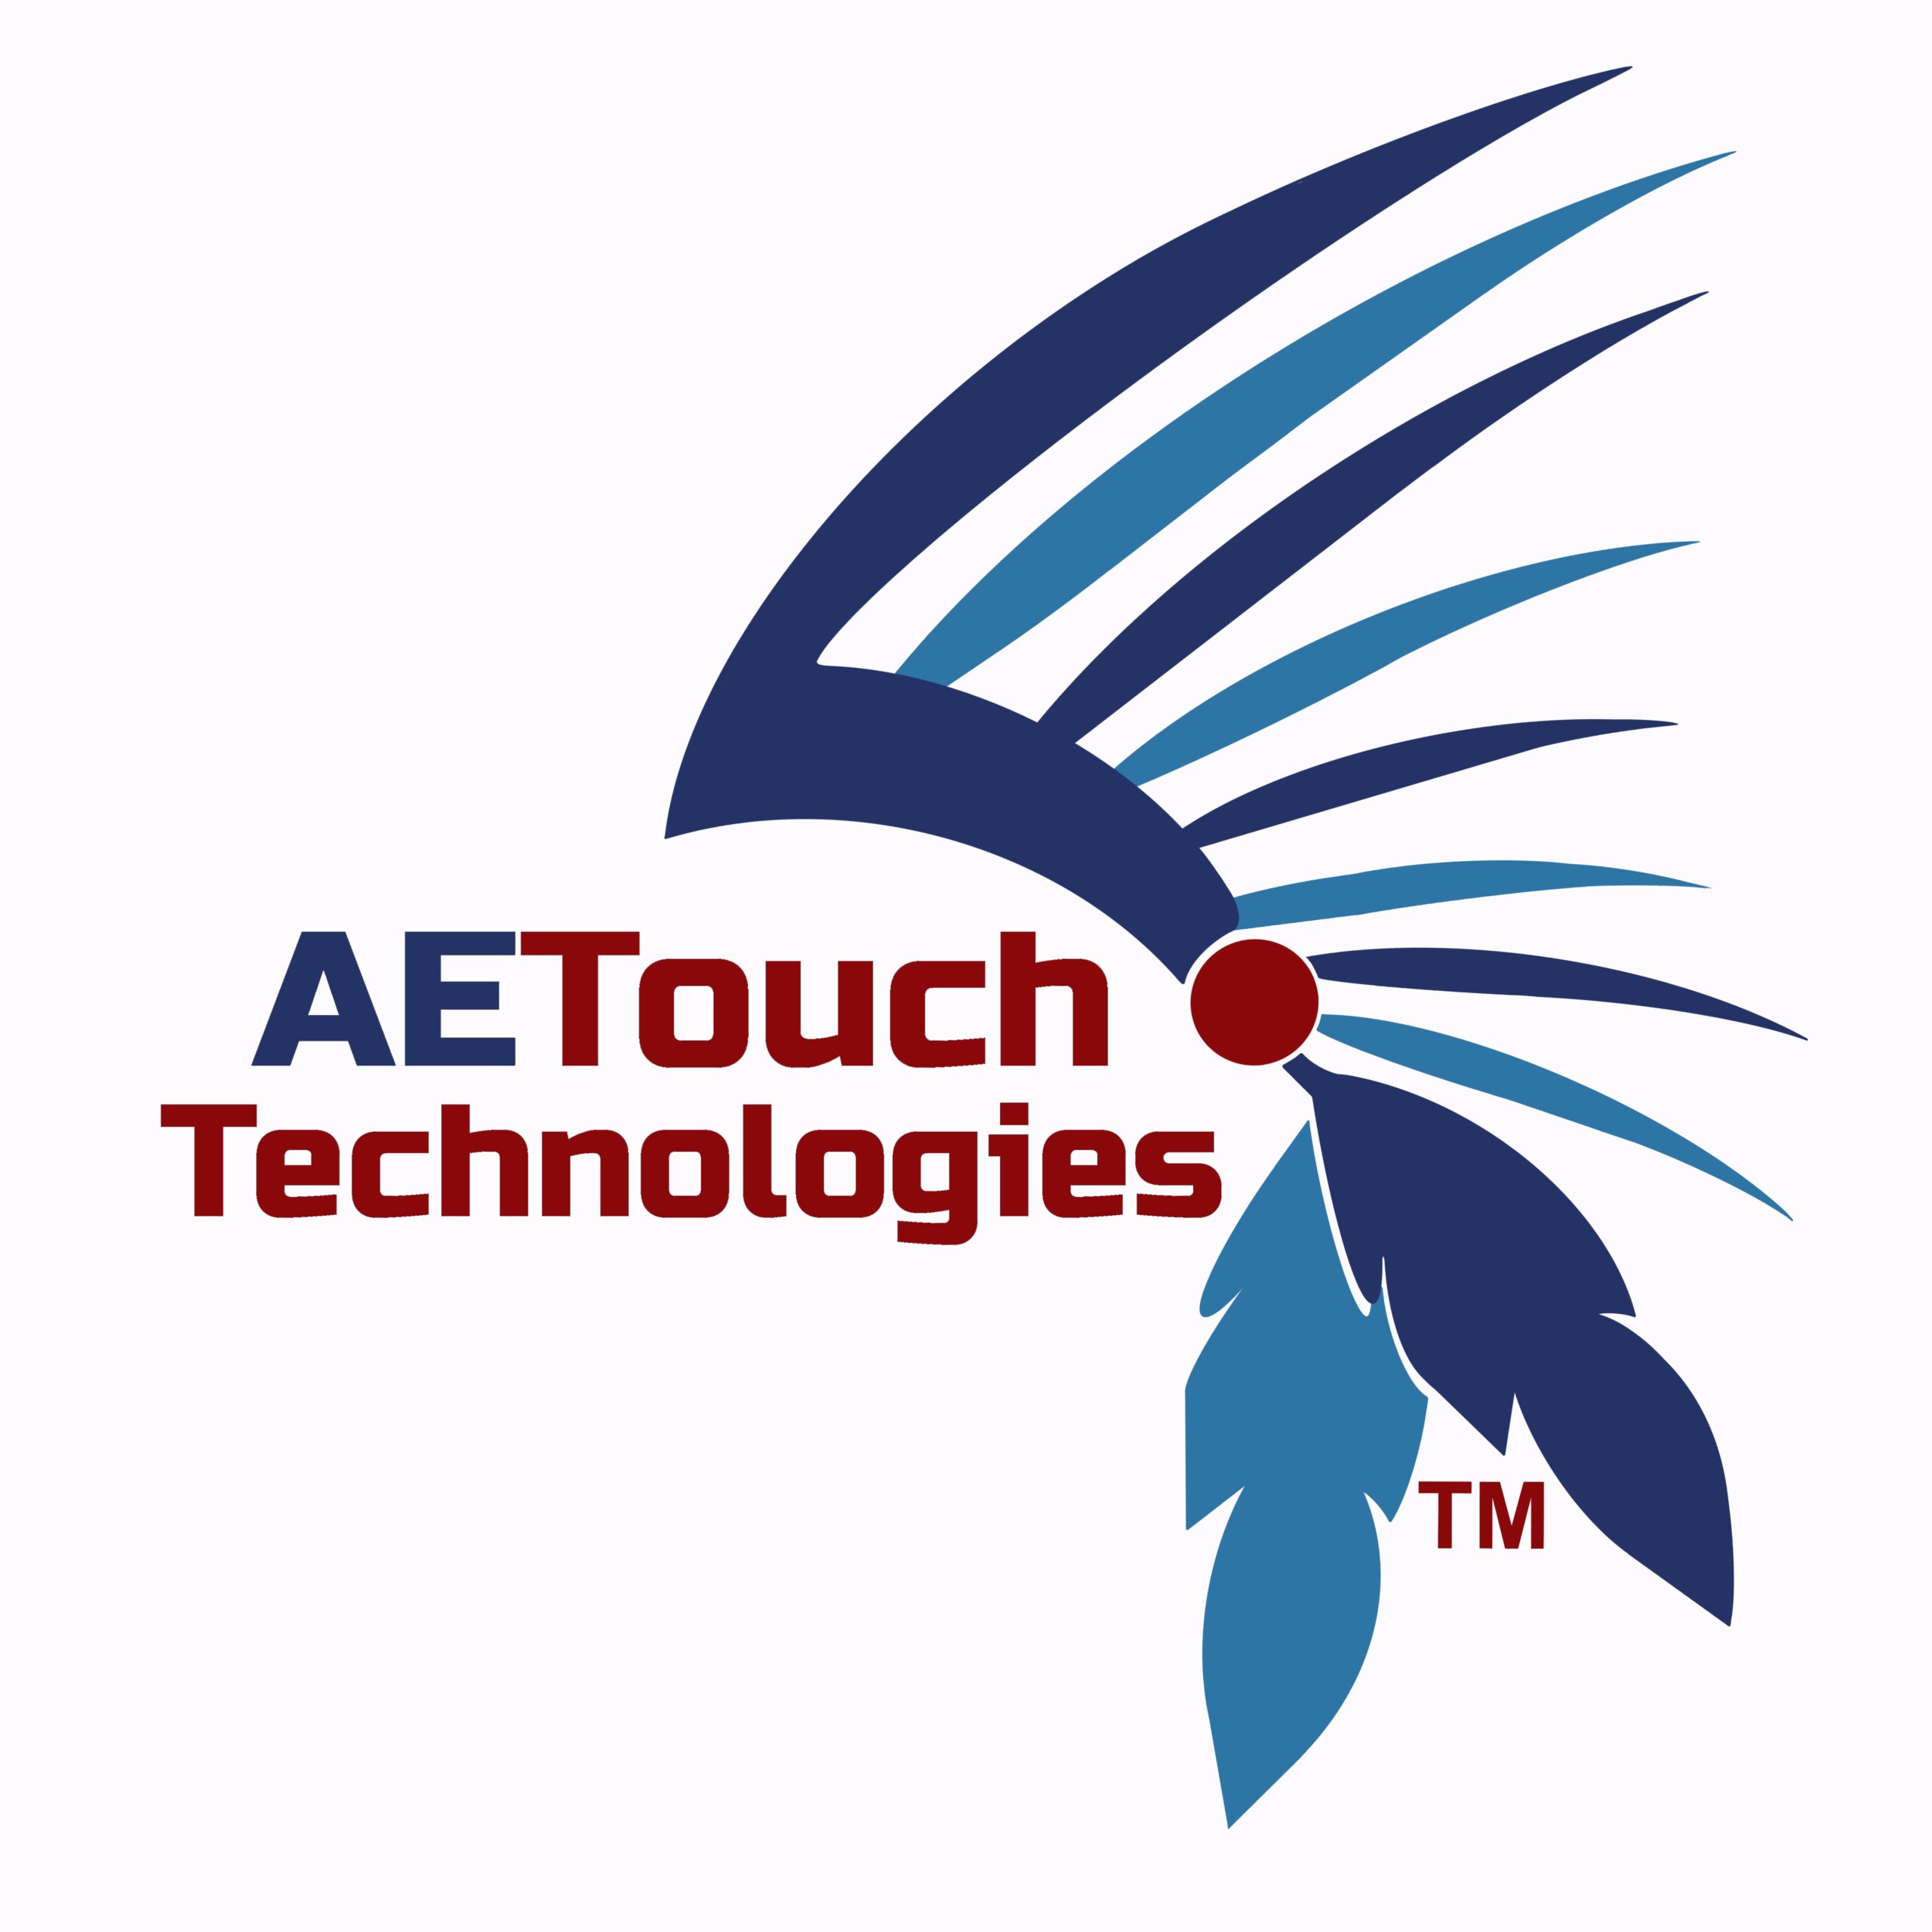 A&E Touch Technologies